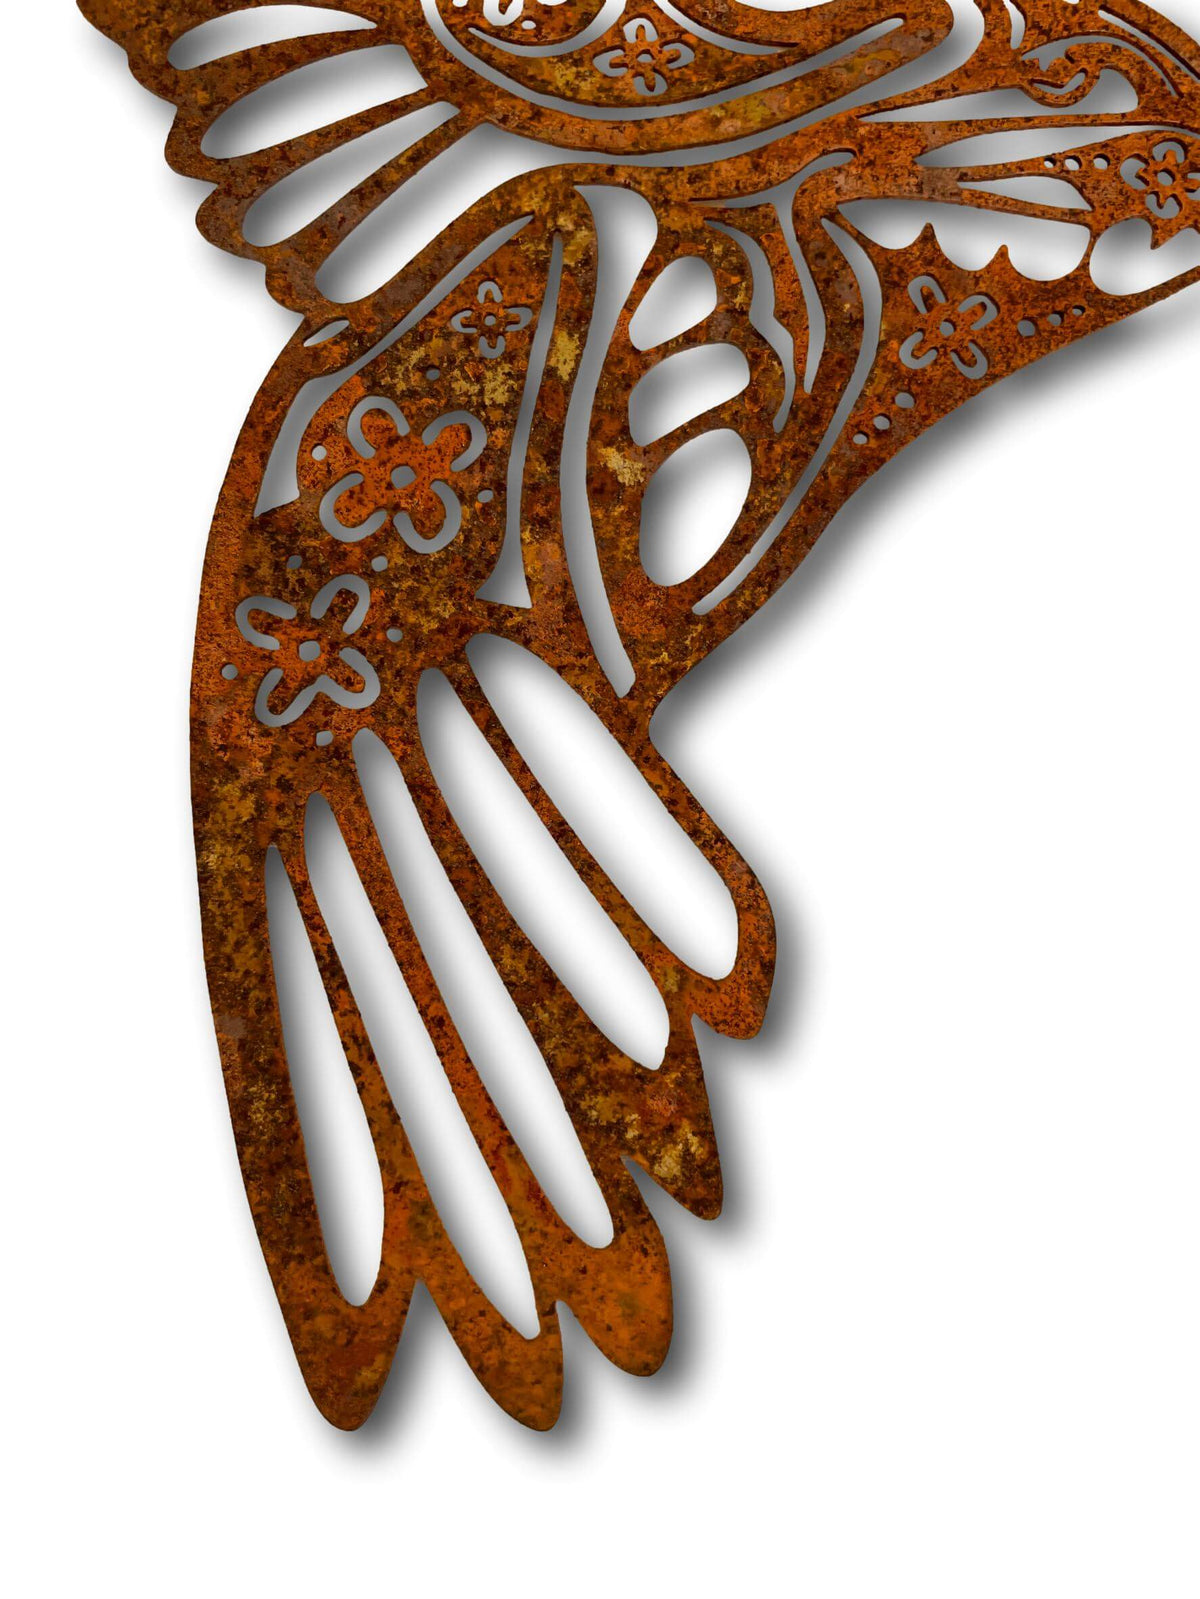 Rustic Hummingbird Wall Art - Laser Cut Metal Art